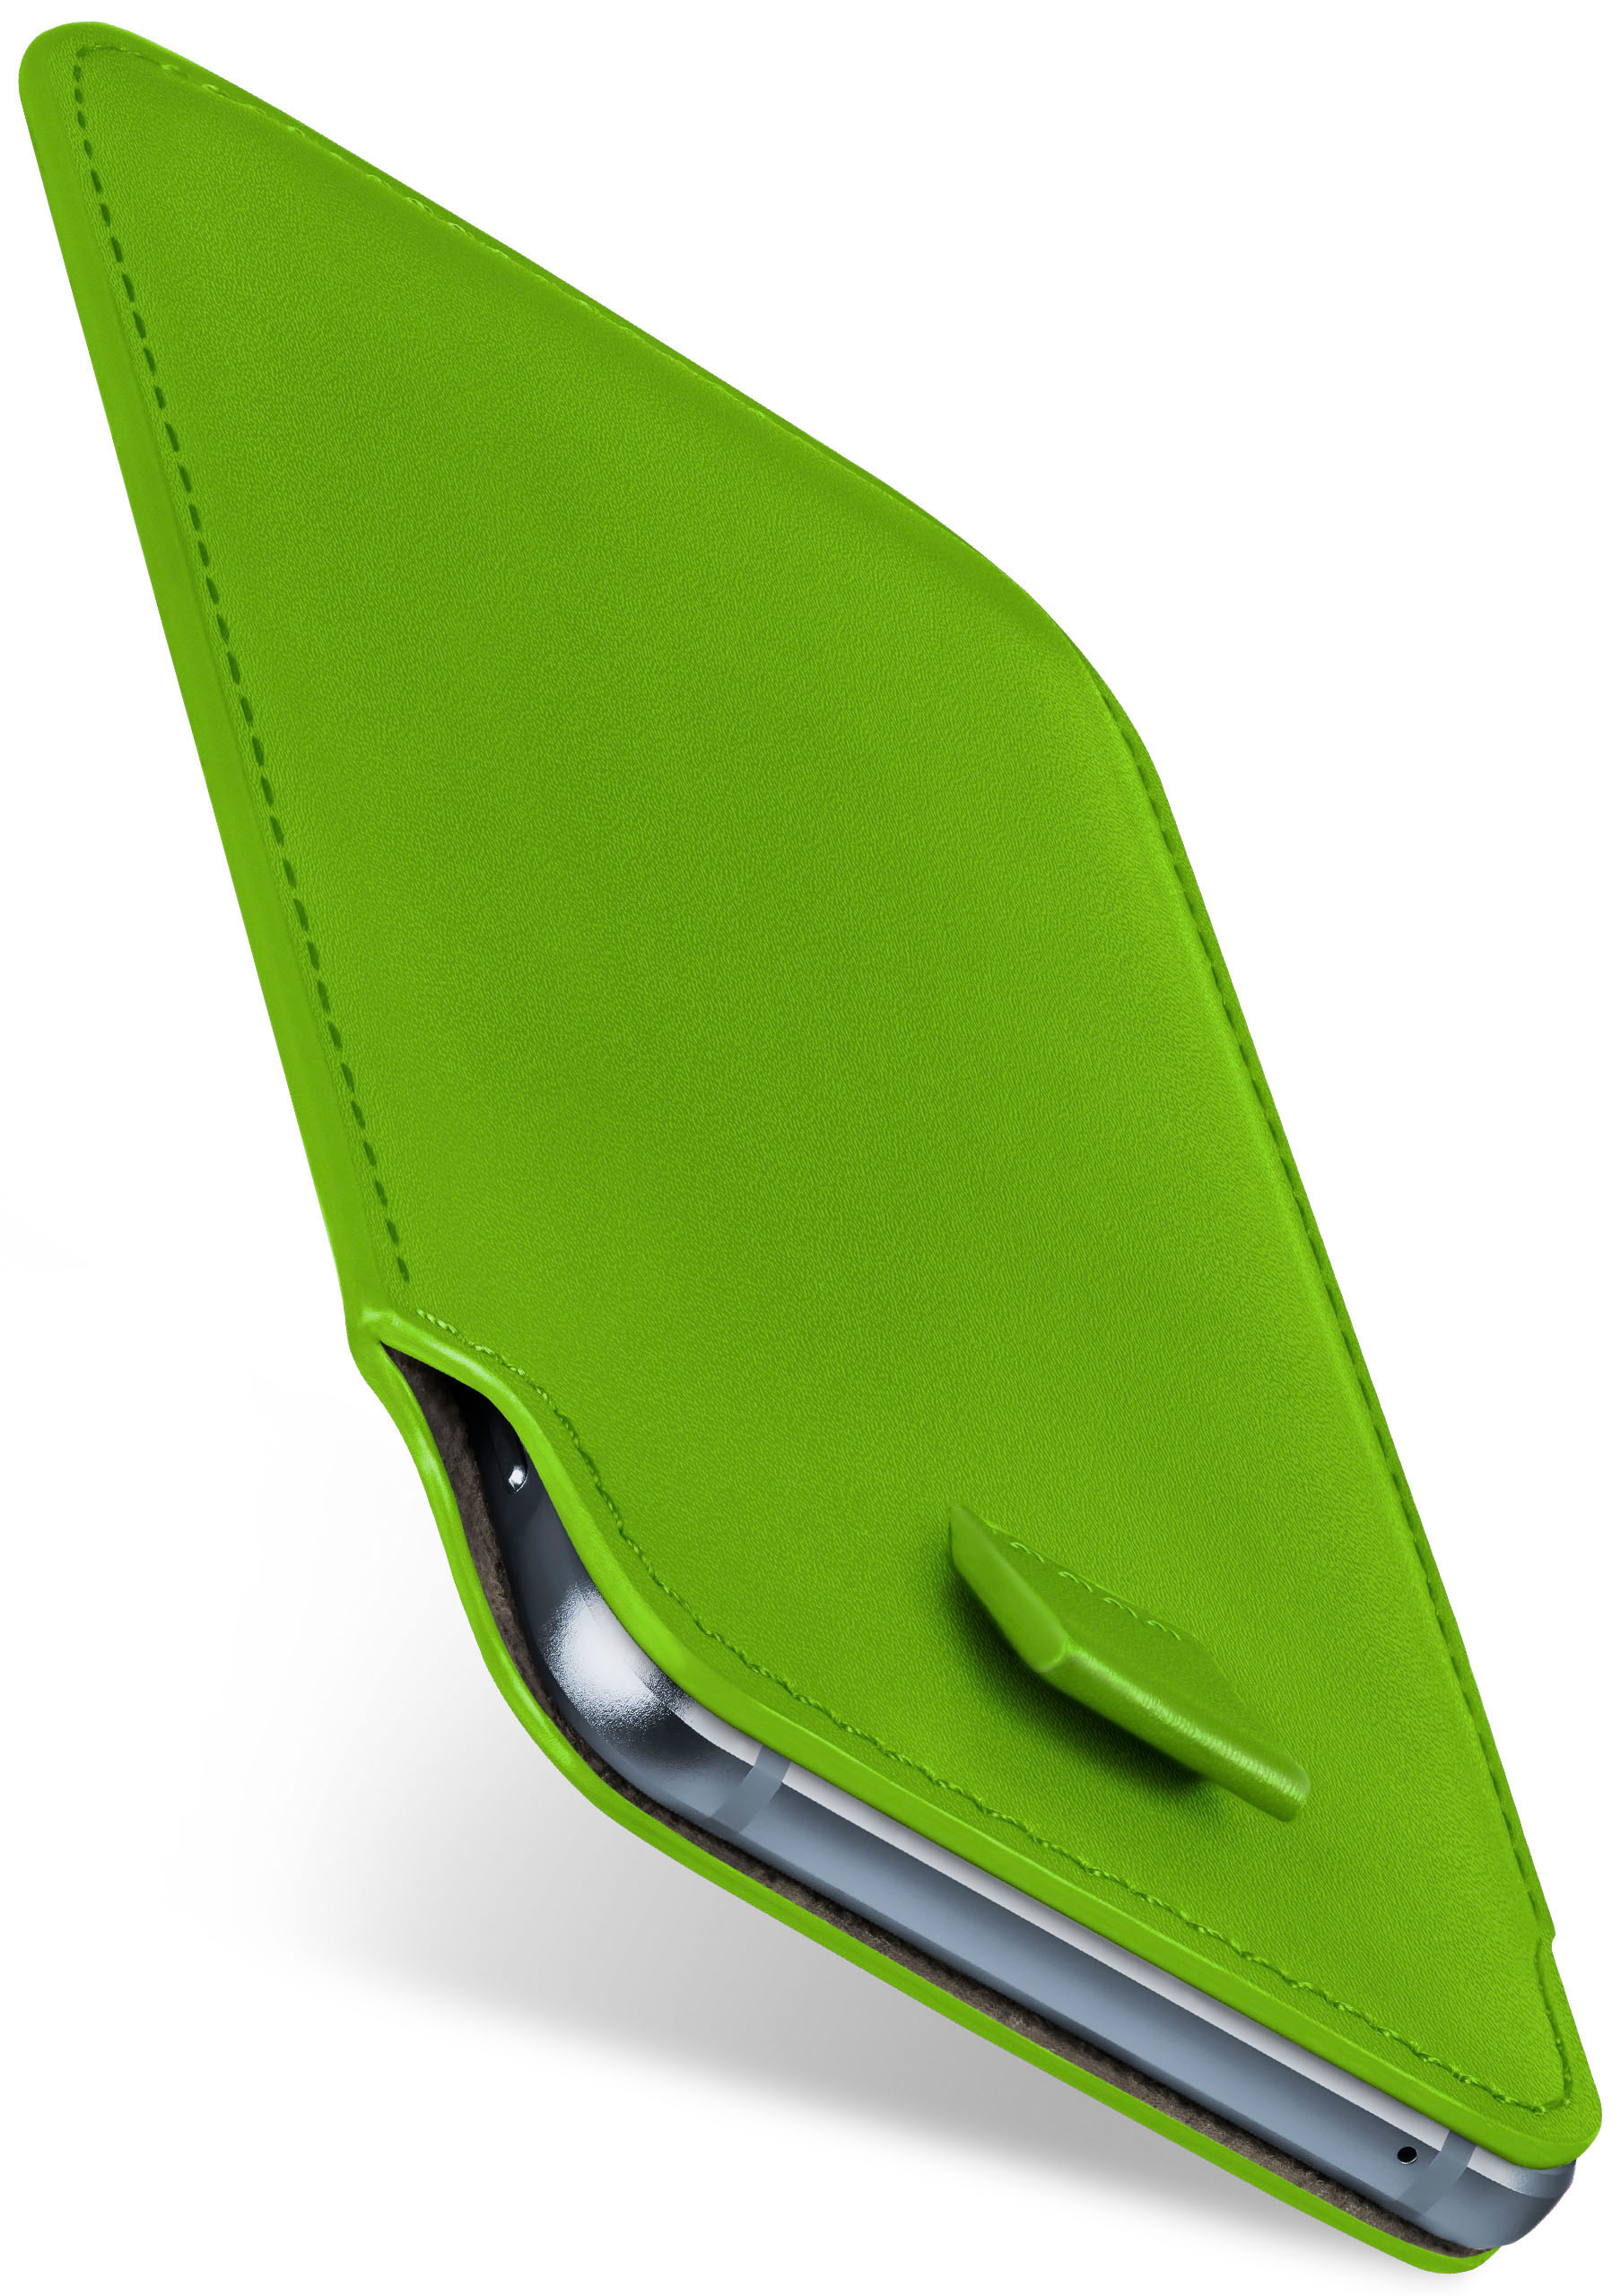 Full Blade Cover, Slide L110, Case, MOEX ZTE, Lime-Green